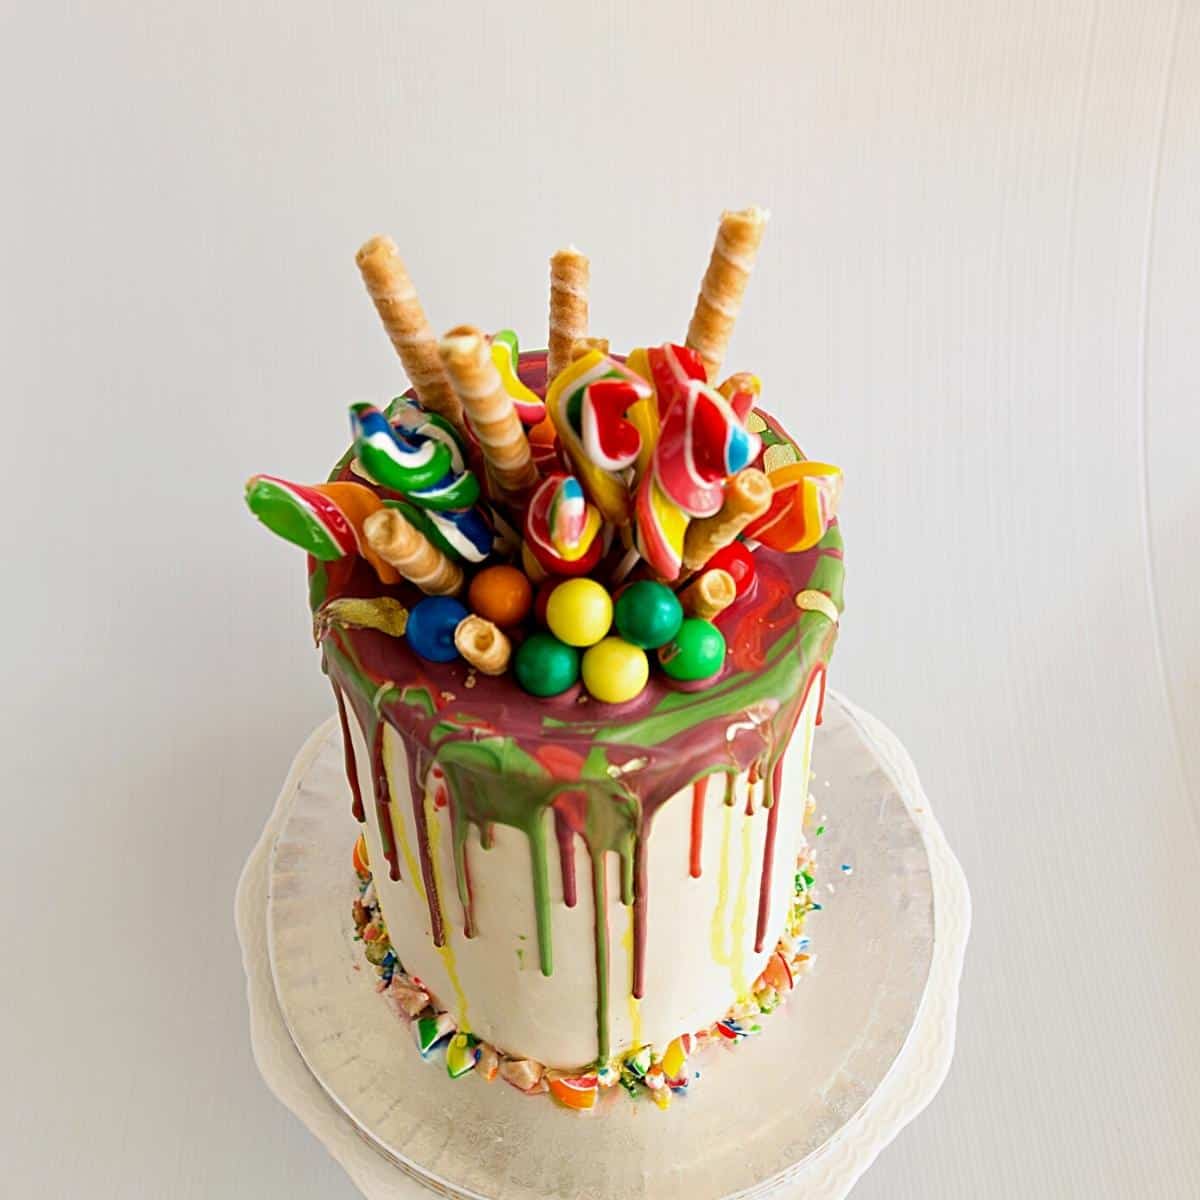 Rainbow cake with ganache drip.